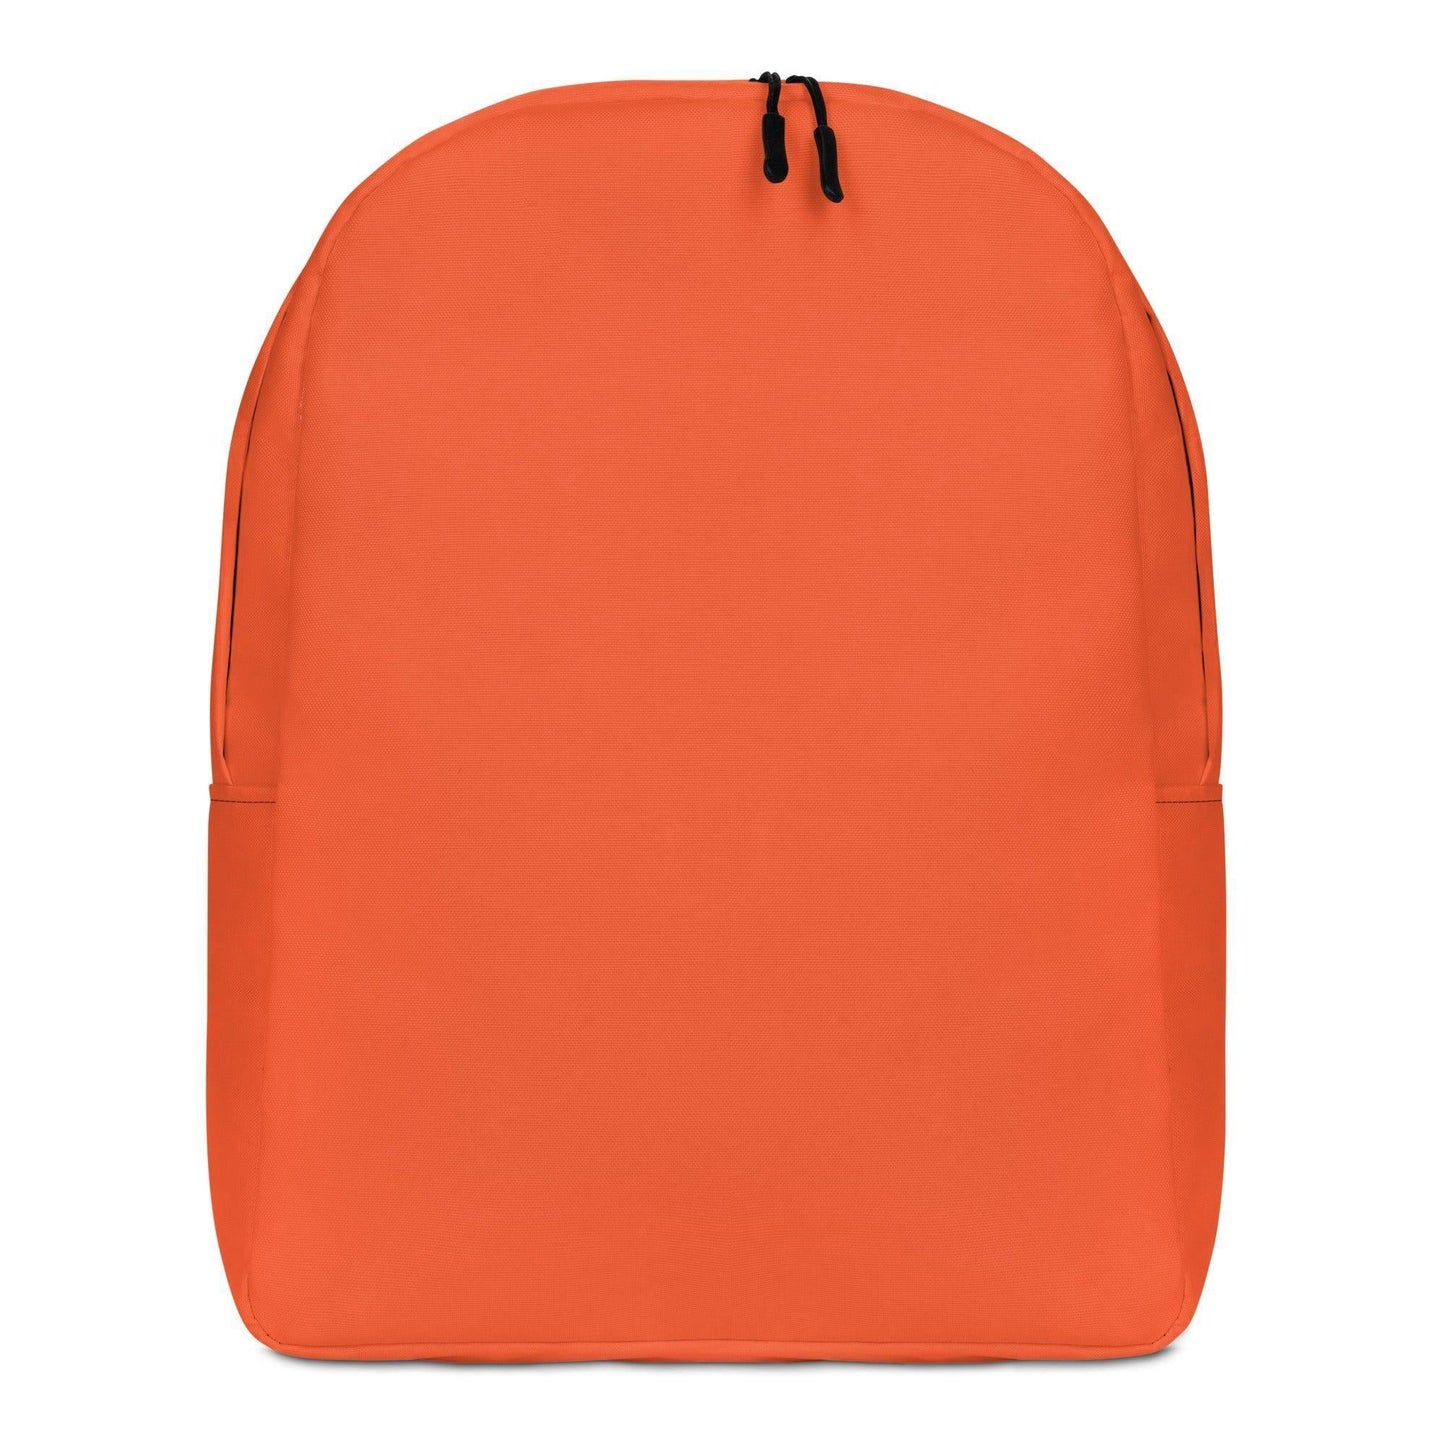 Outrageous Orange Rucksack -- Outrageous Orange Rucksack - undefined Rucksack | JLR Design